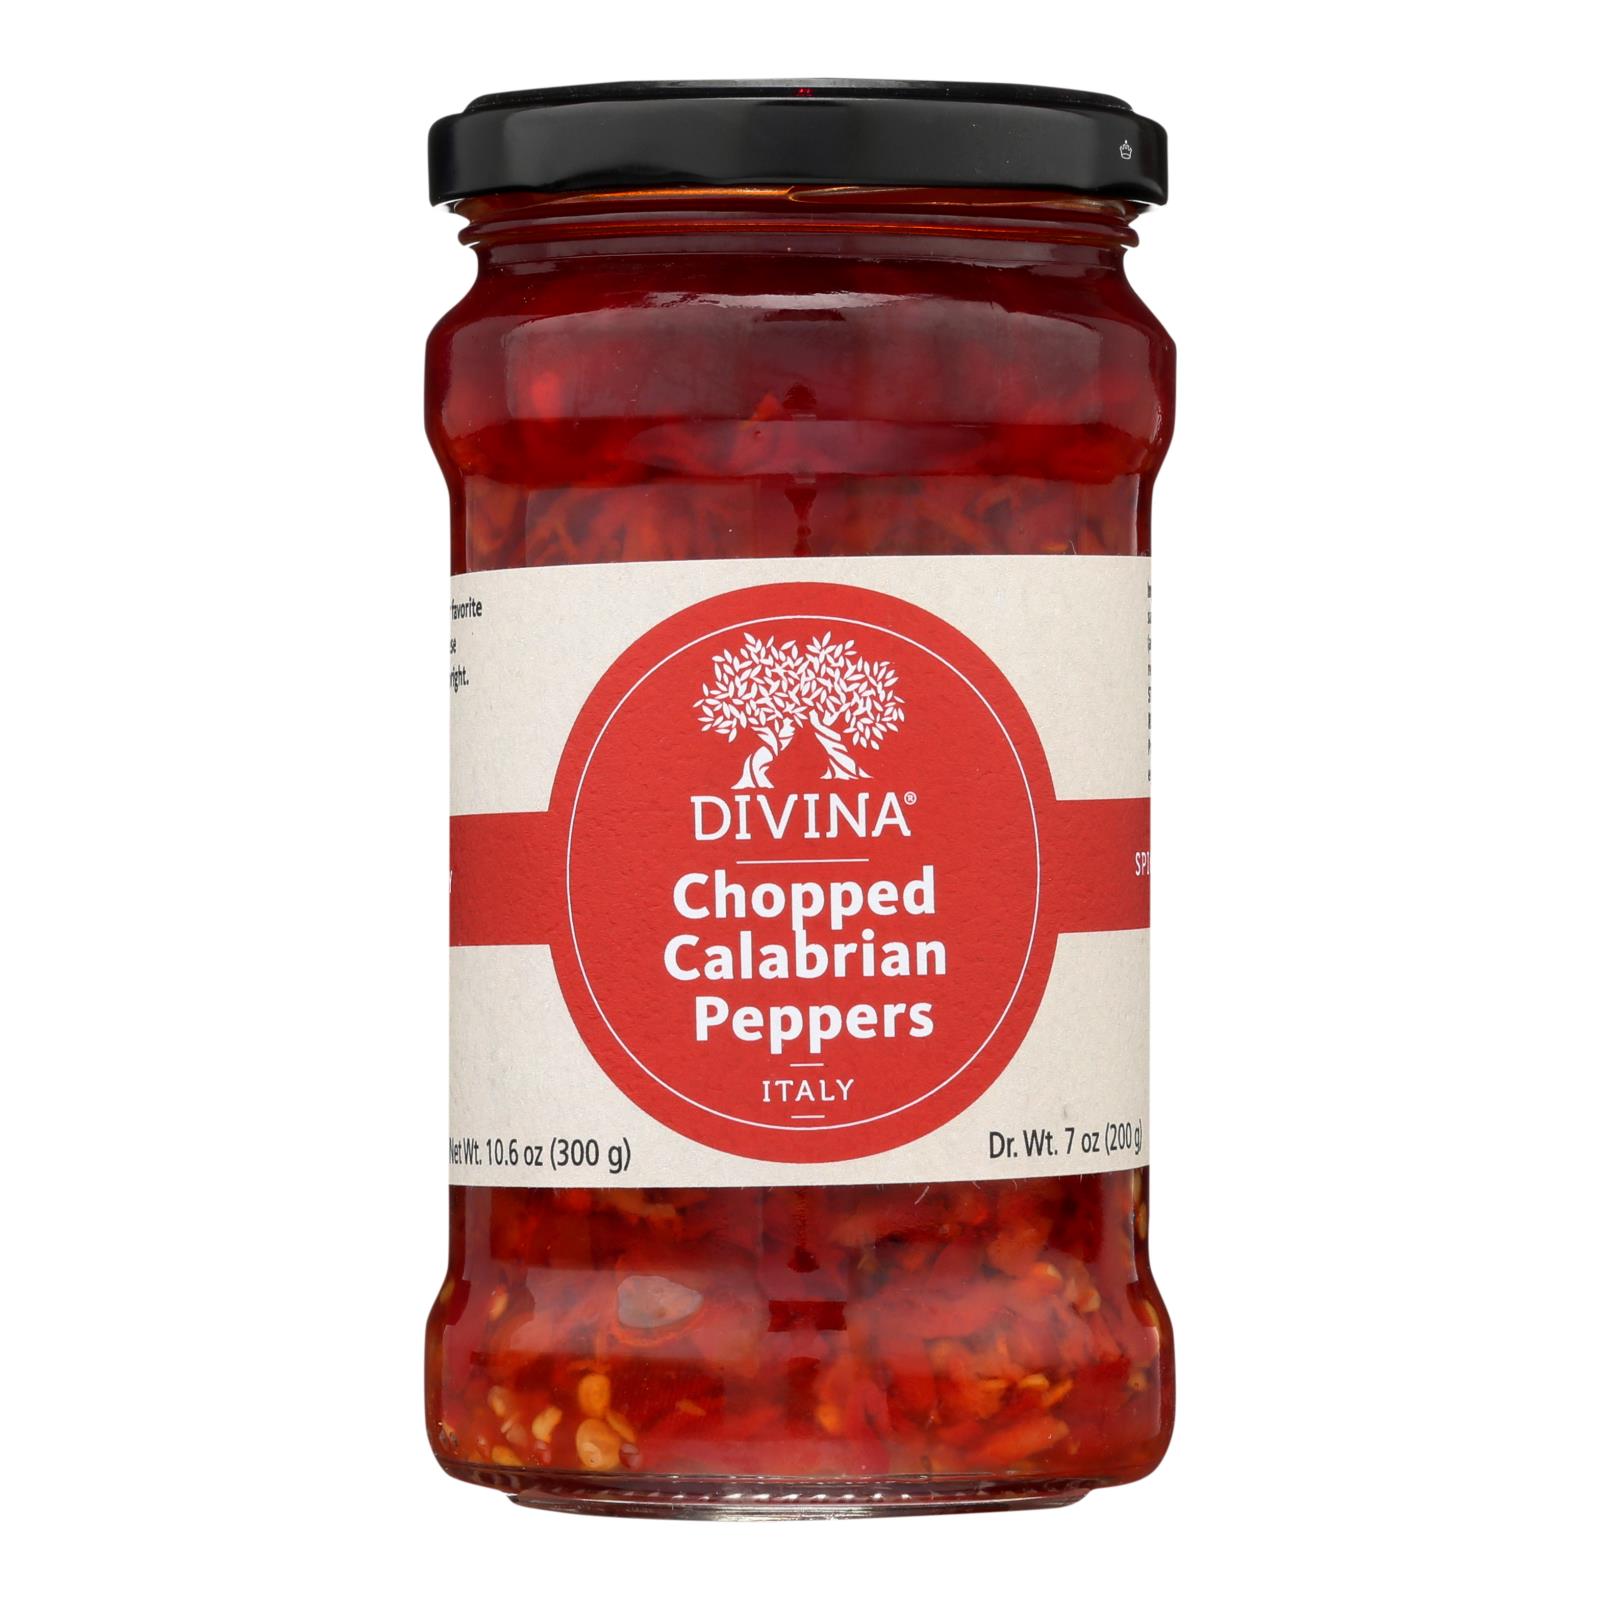 Divina - Peppers Chopd Calabrian - 6개 묶음상품 - 10.6 OZ